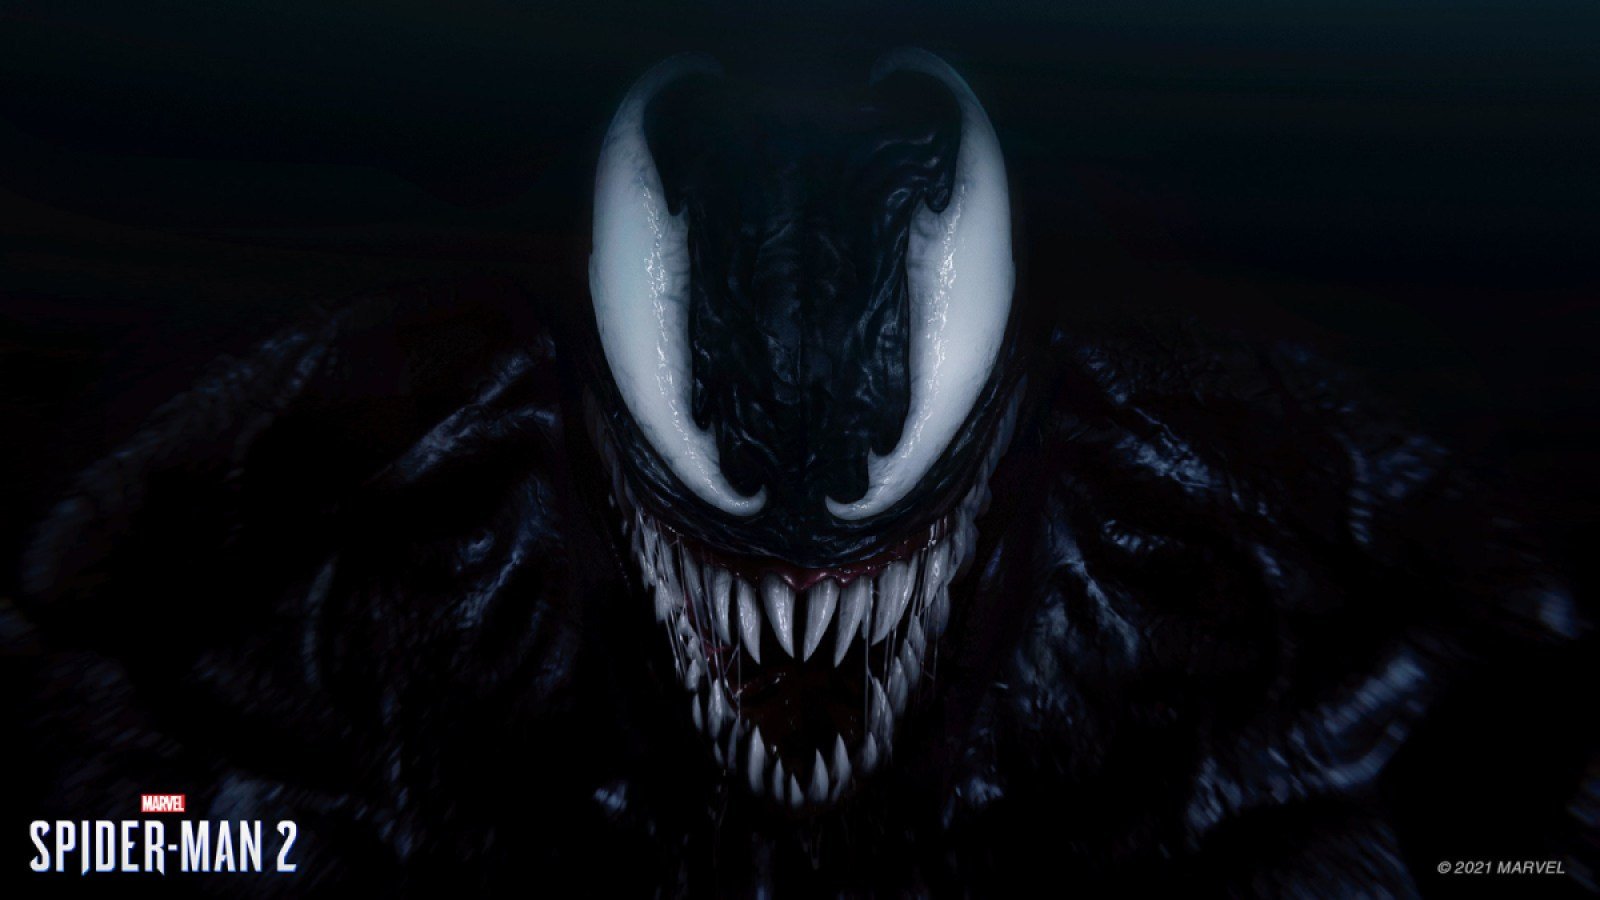 Venom grins creeply against a black background